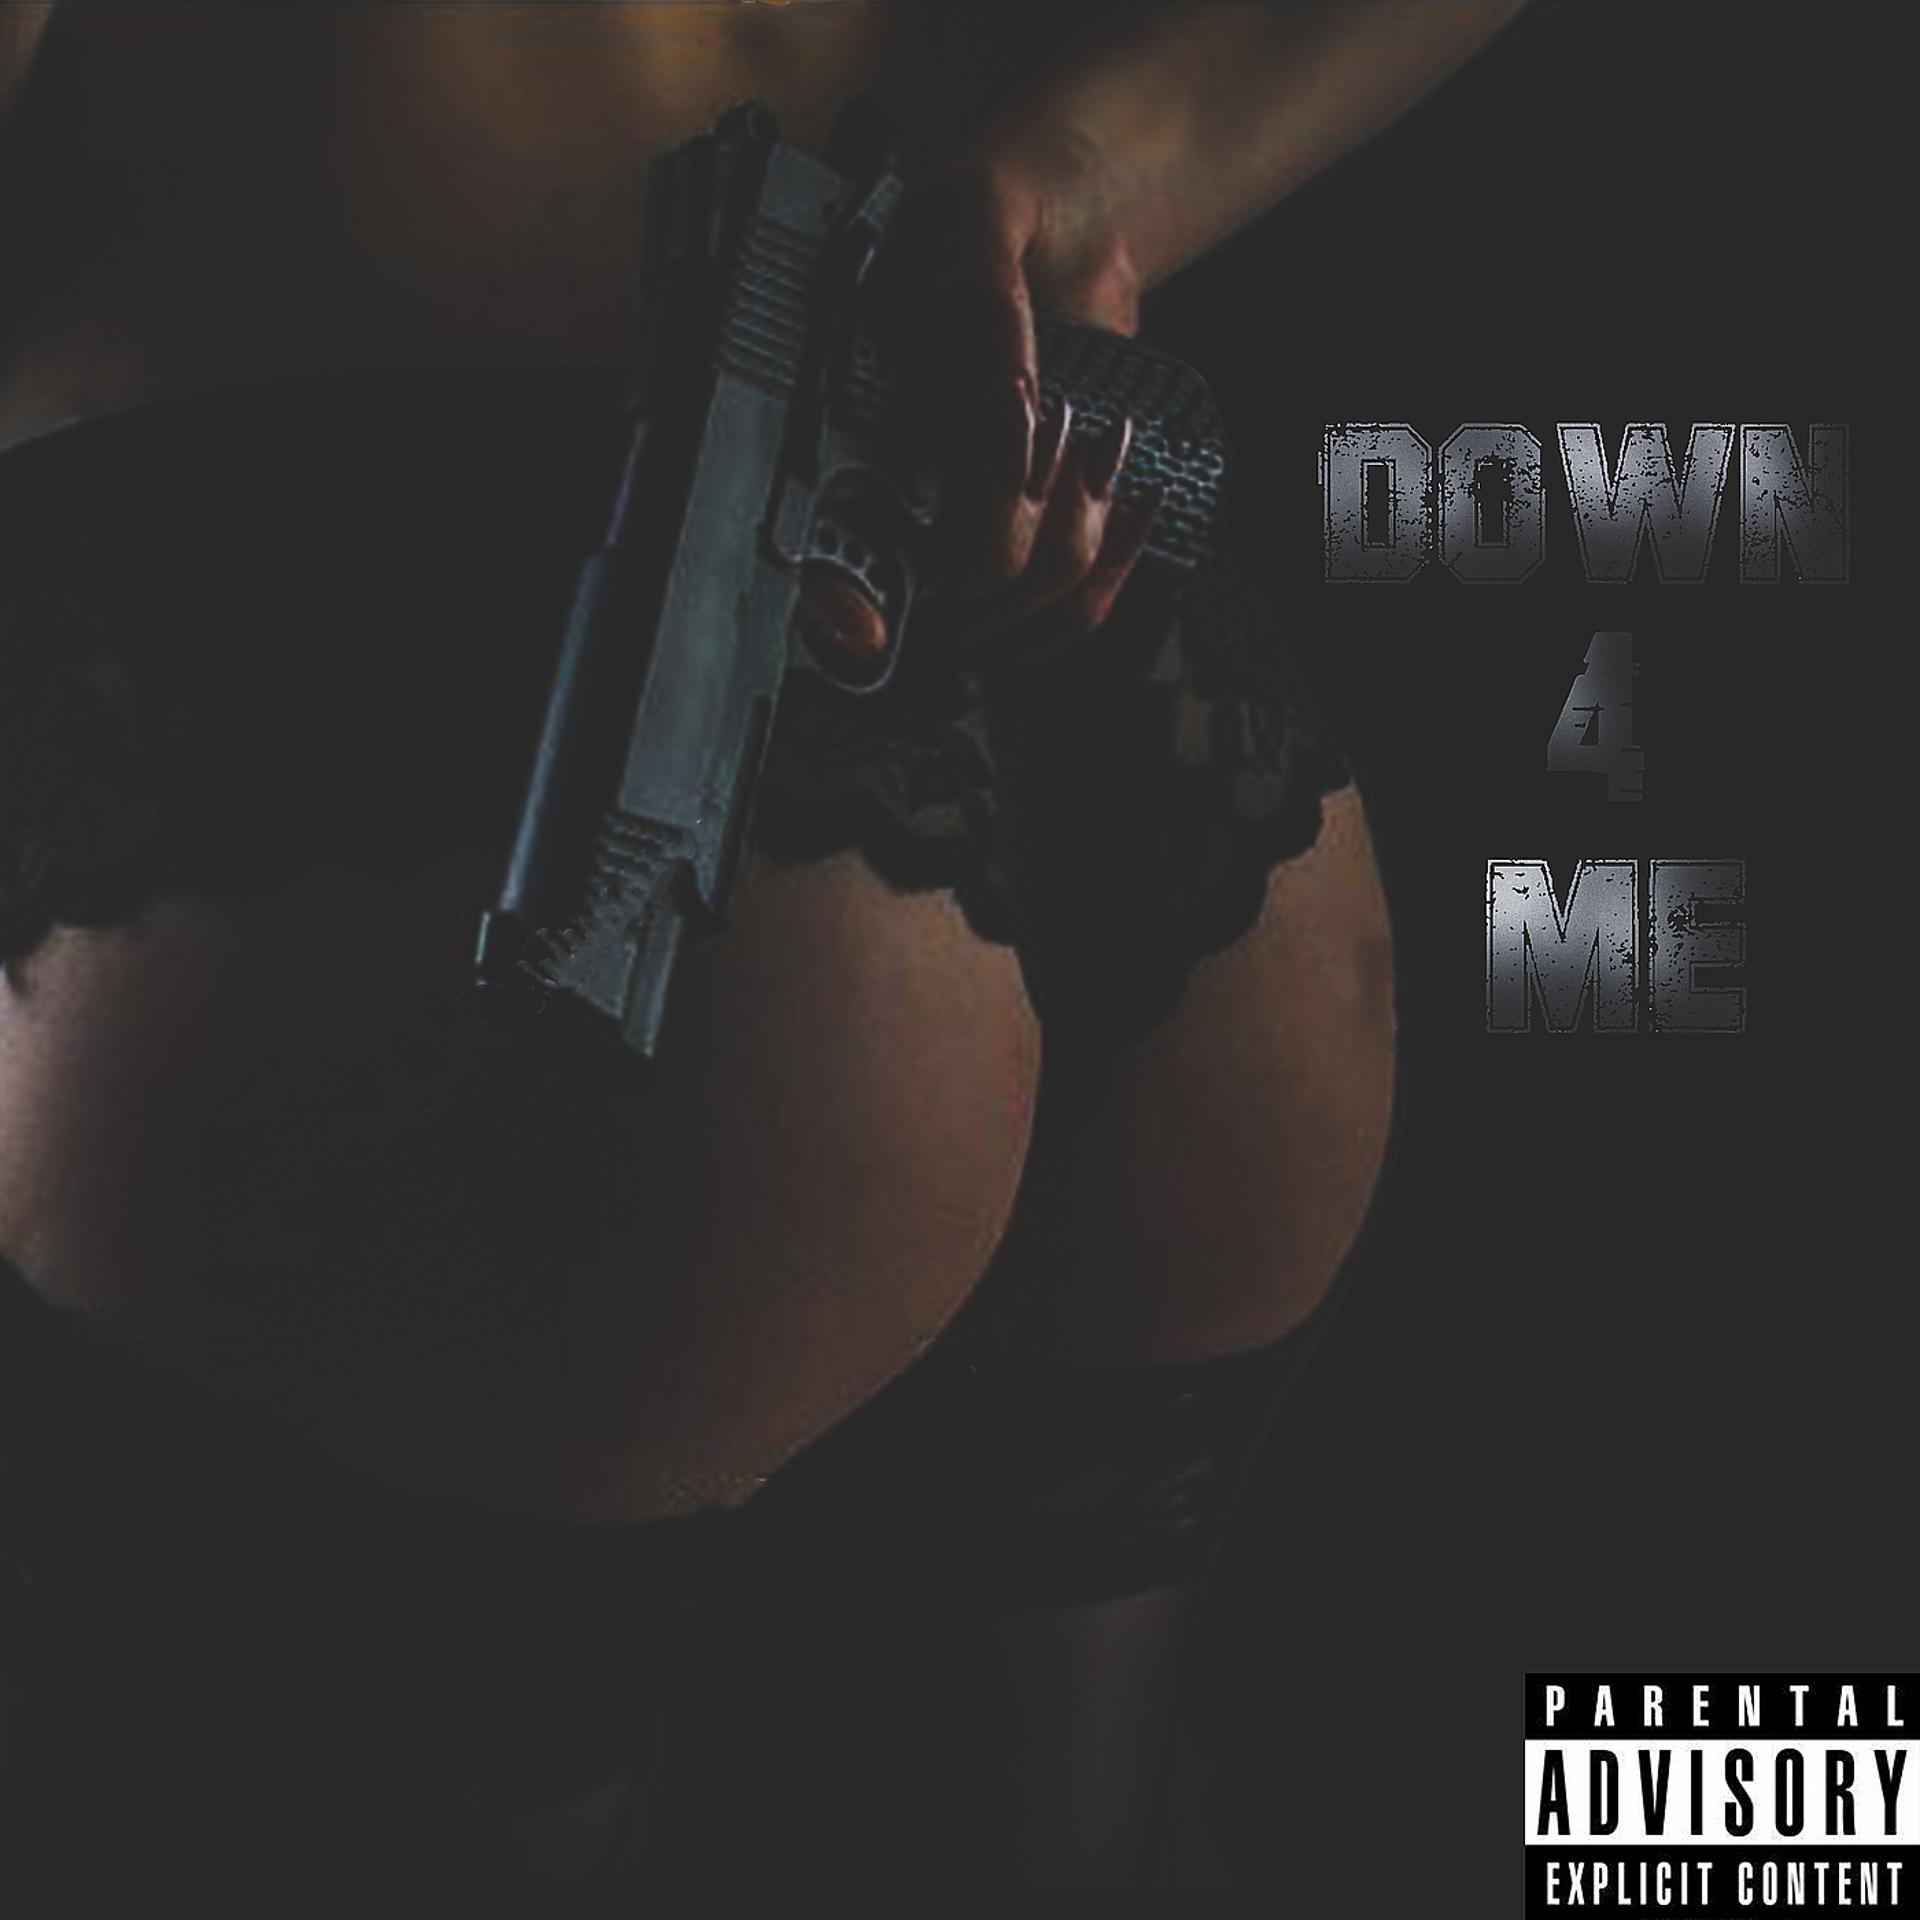 Постер альбома Down 4 Me